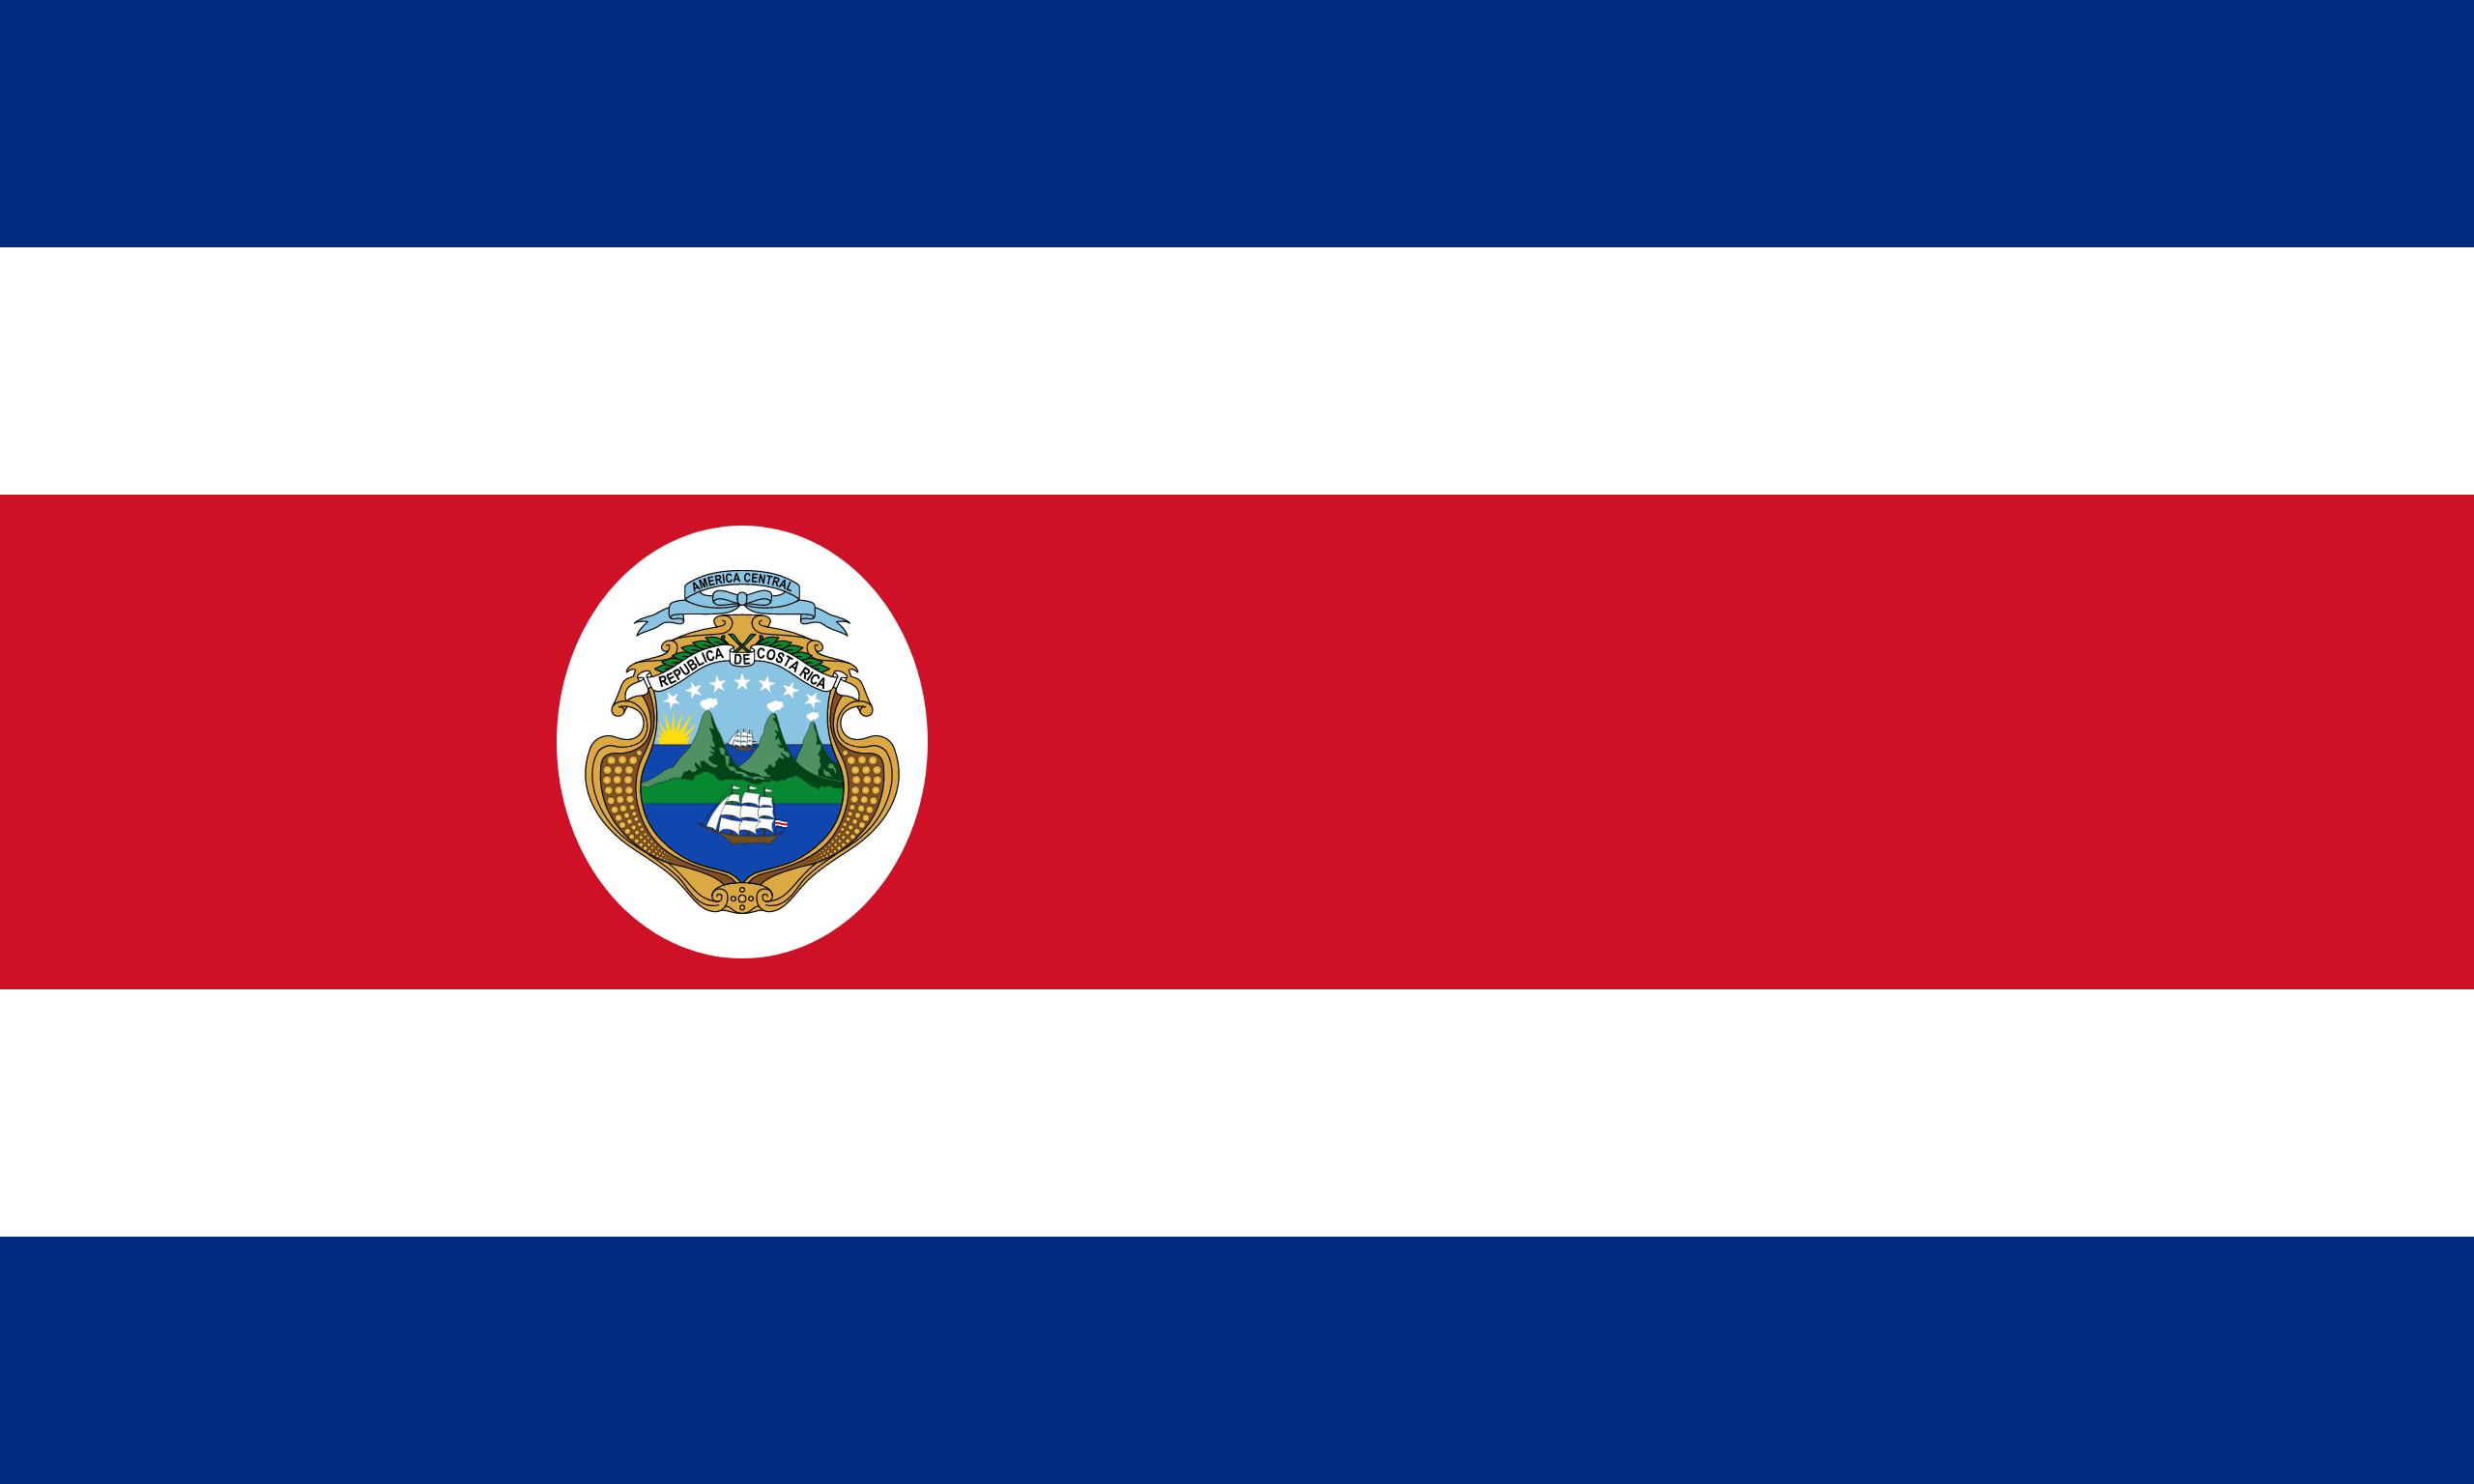 Flag_of_Costa_Rica